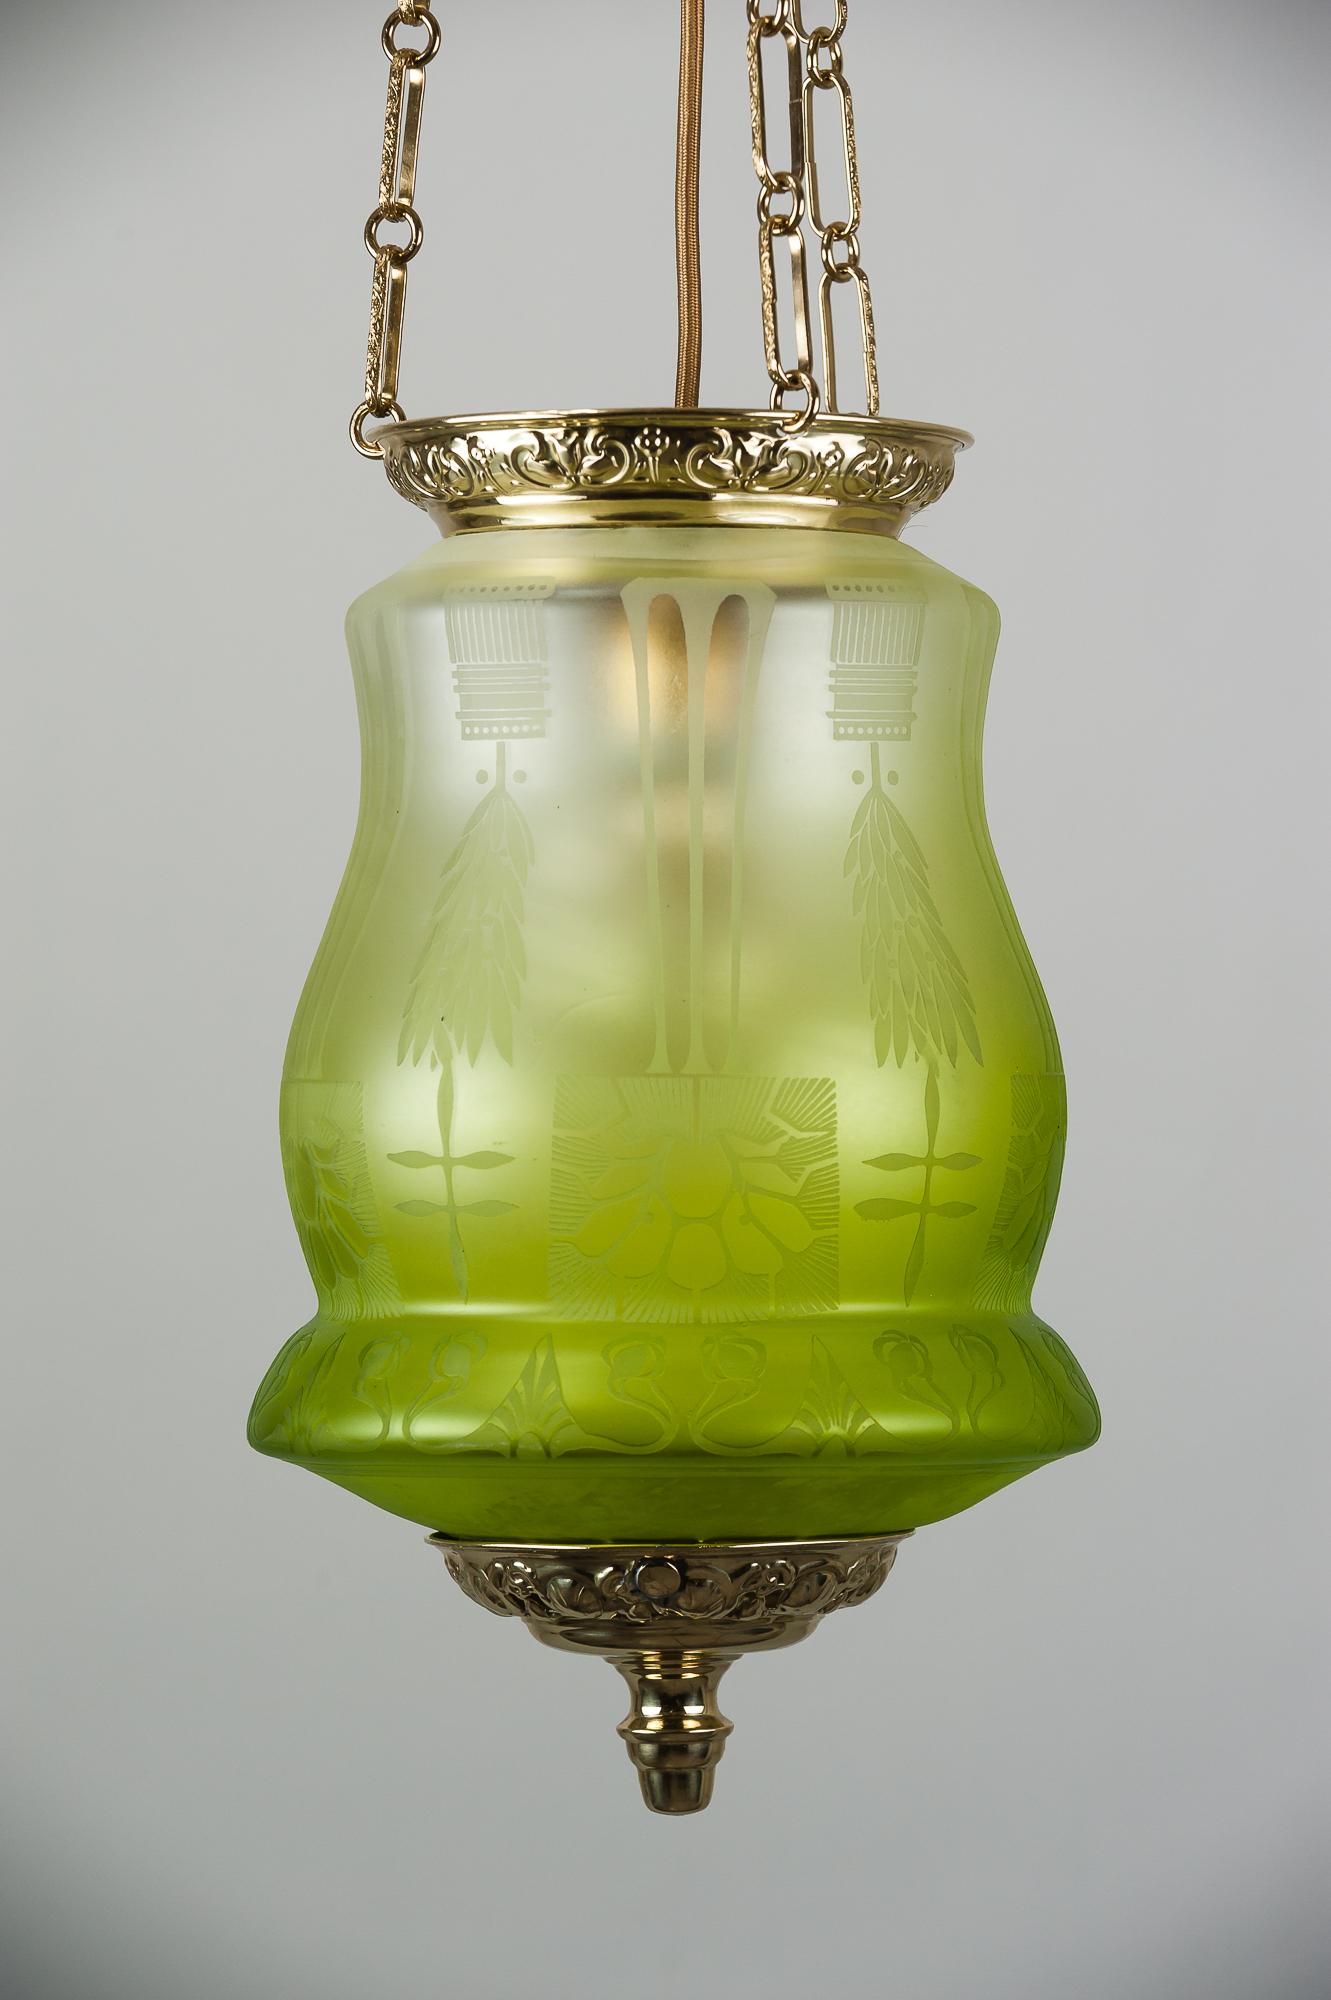 Jugendstil pendant circa 1900s with original glass.
Brass polished and stove enameled.
 